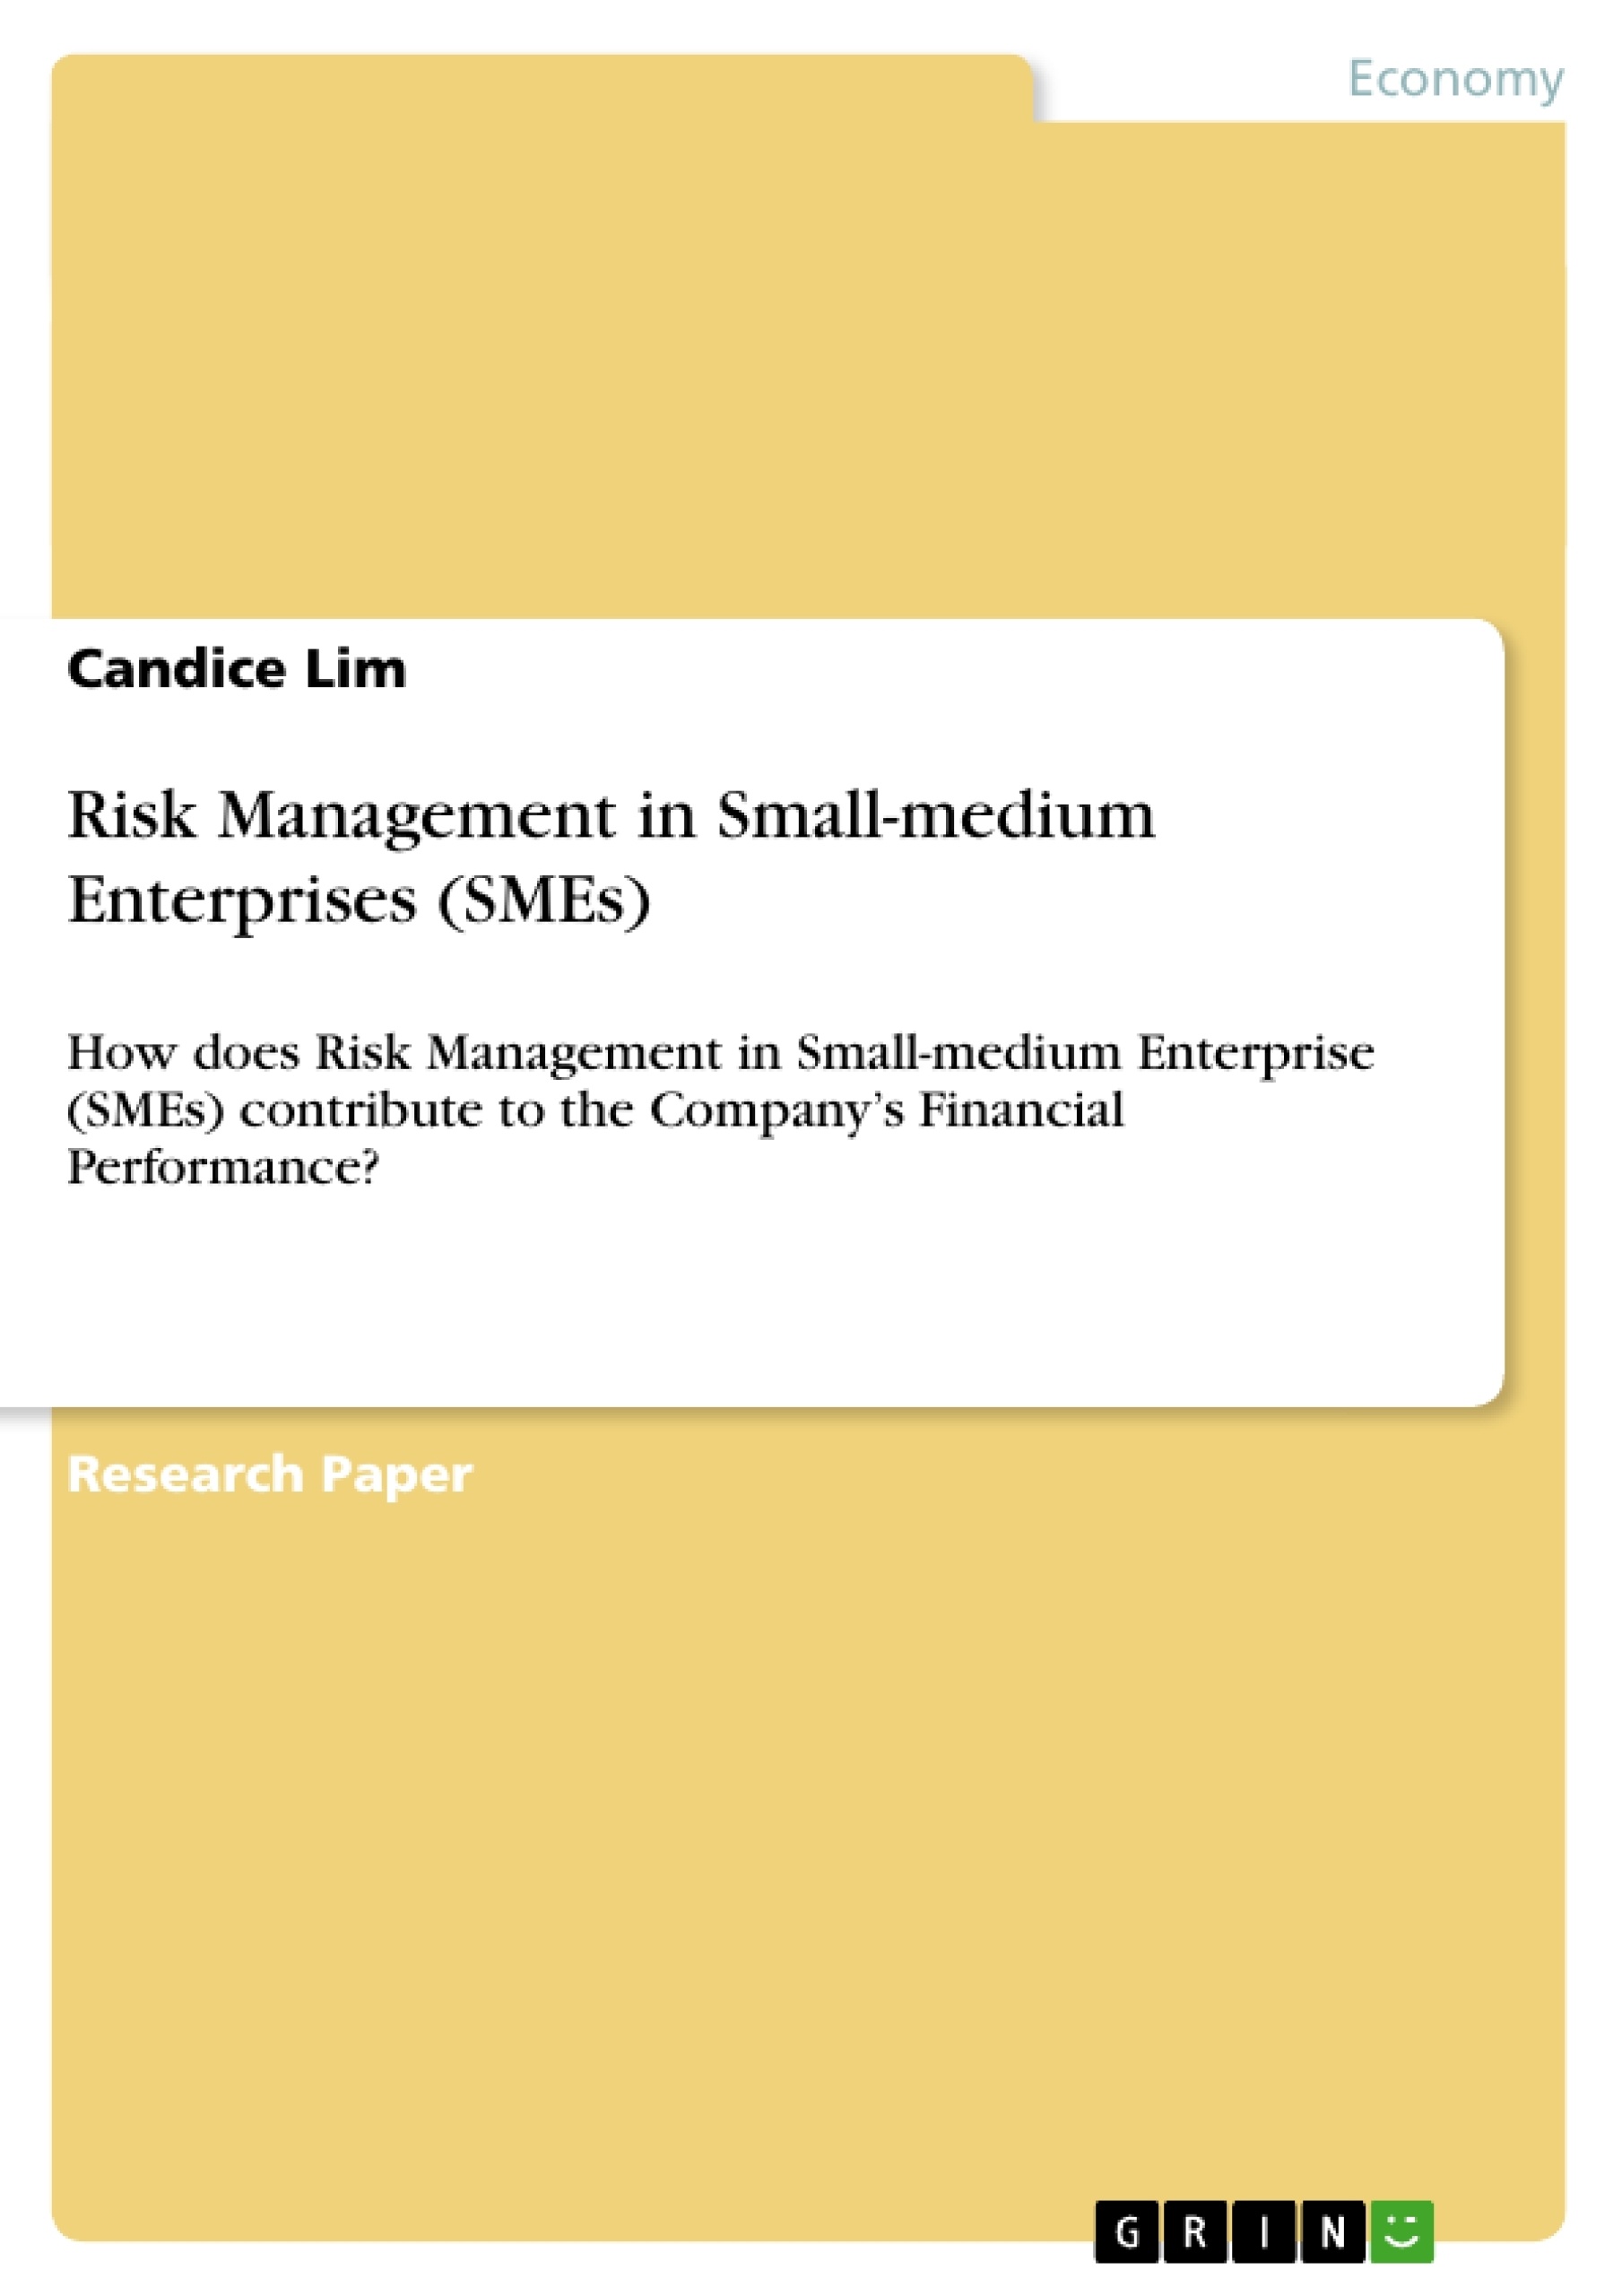 Research paper on enterprise risk management